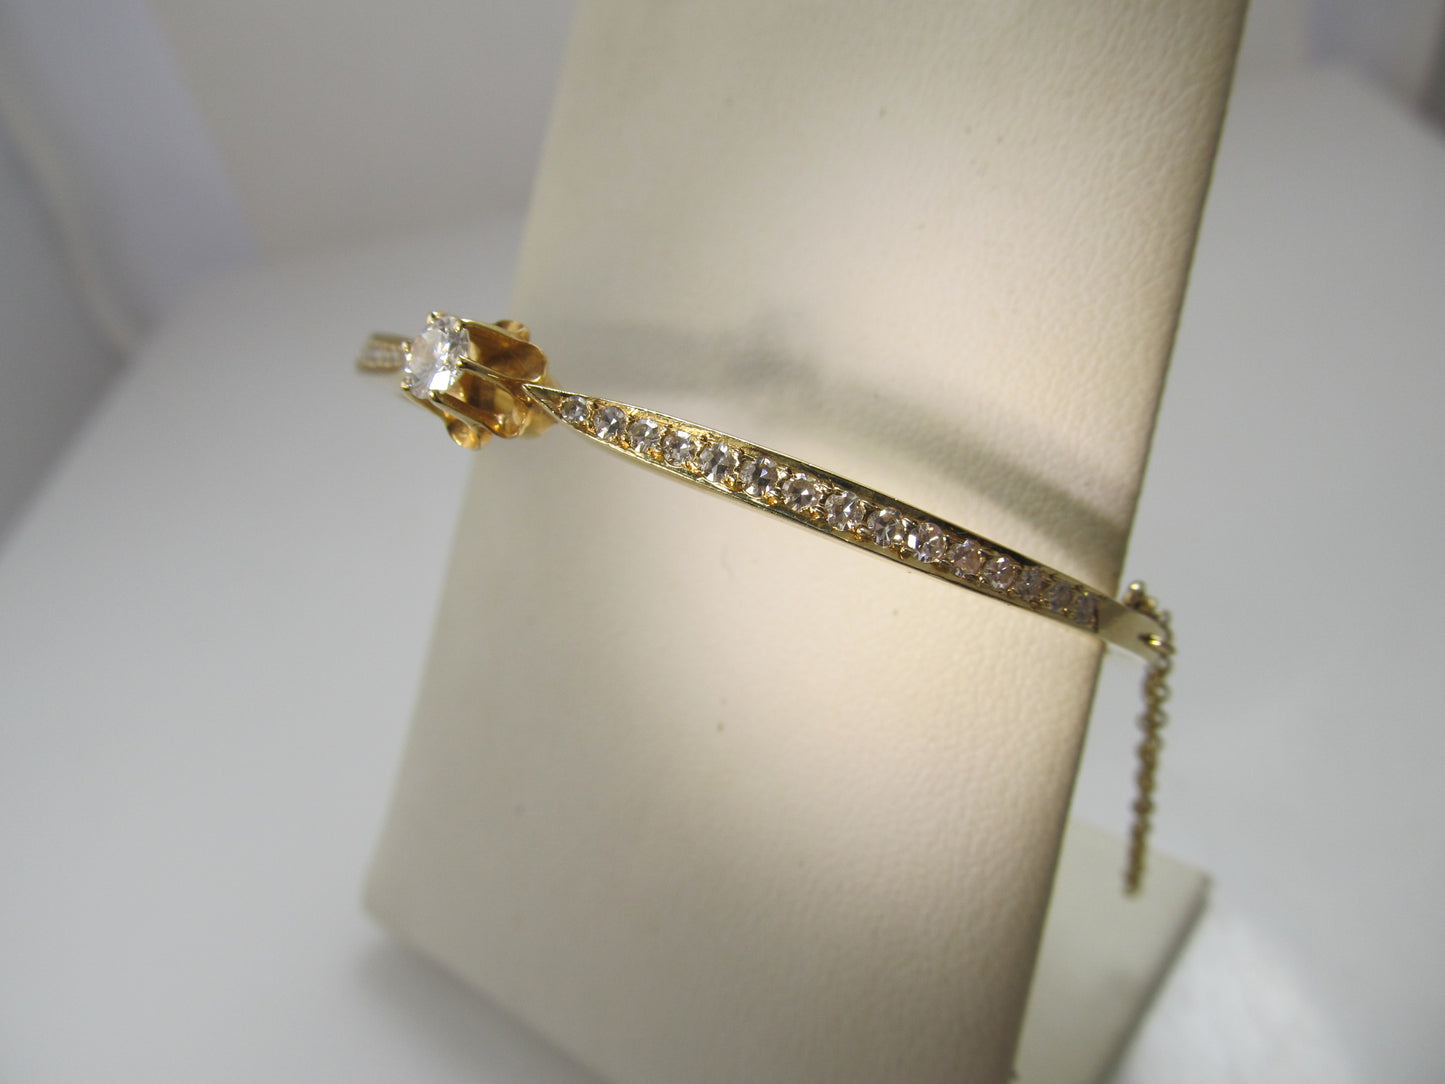 Antique style 14k yellow gold diamond bangle bracelet